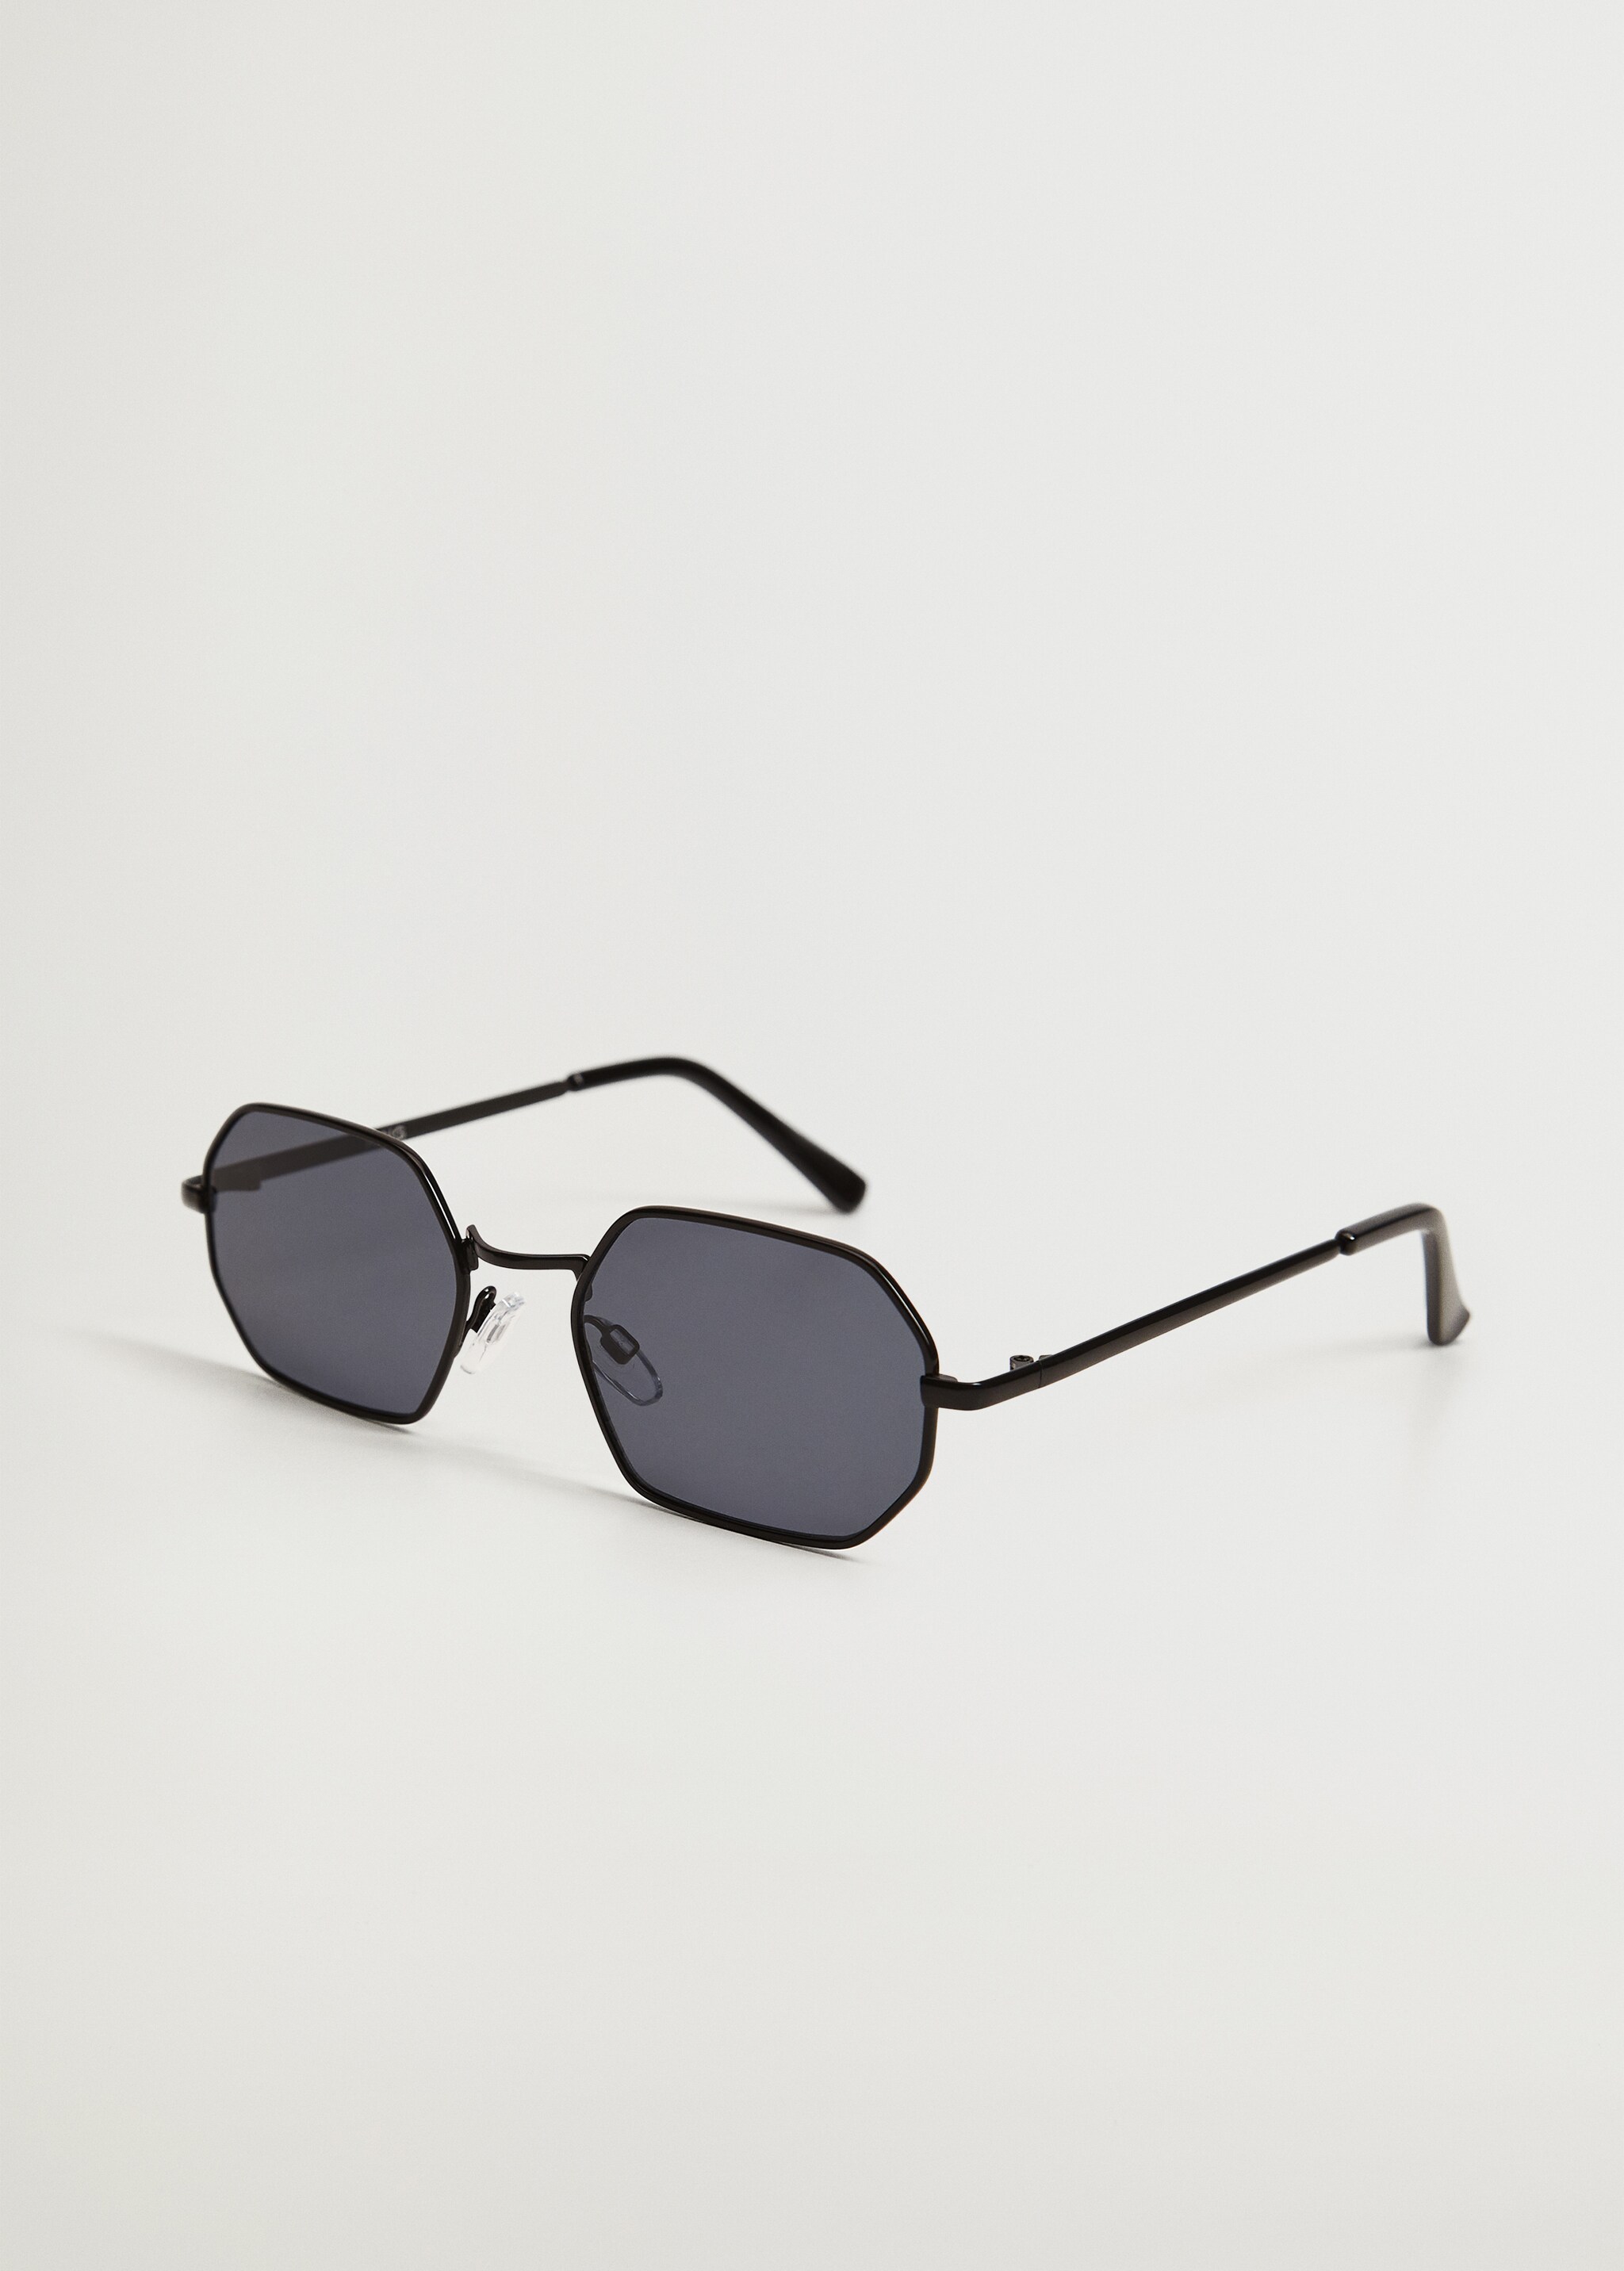 Hexagonal frame sunglasses - Medium plane